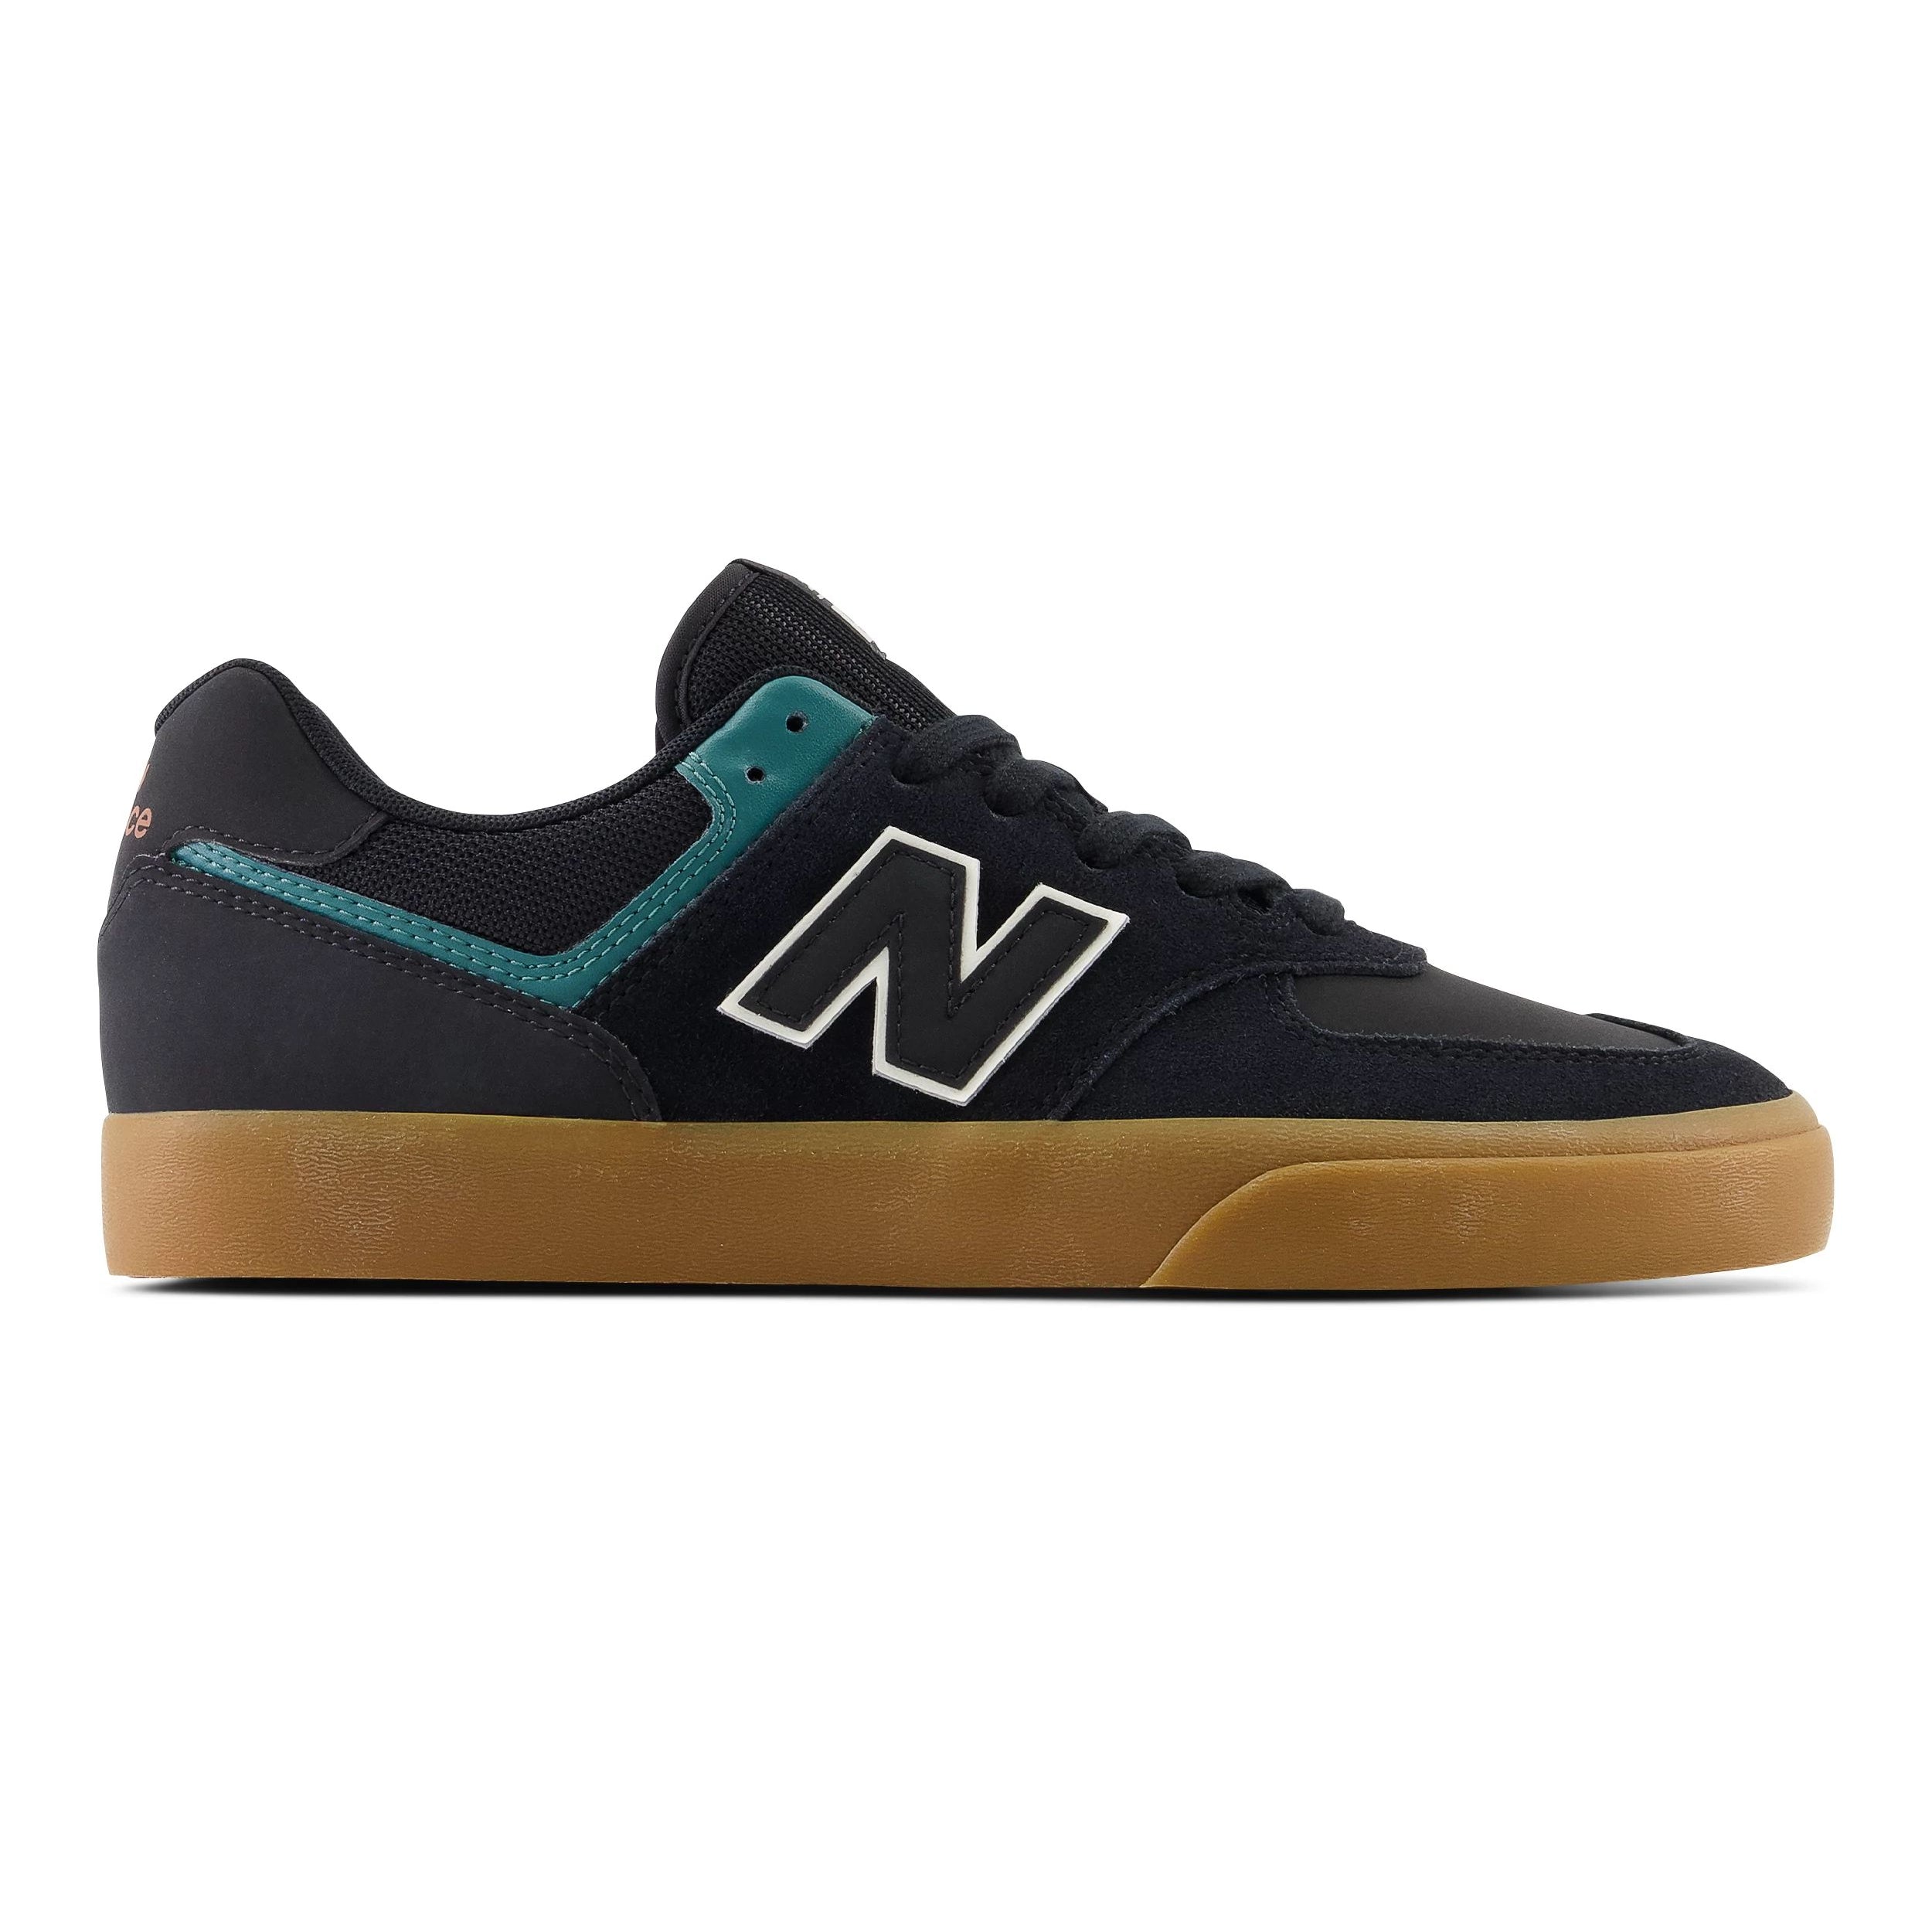 New Balance Numeric 574 Vulc Skateboard Shoe - Black/Vintage Teal